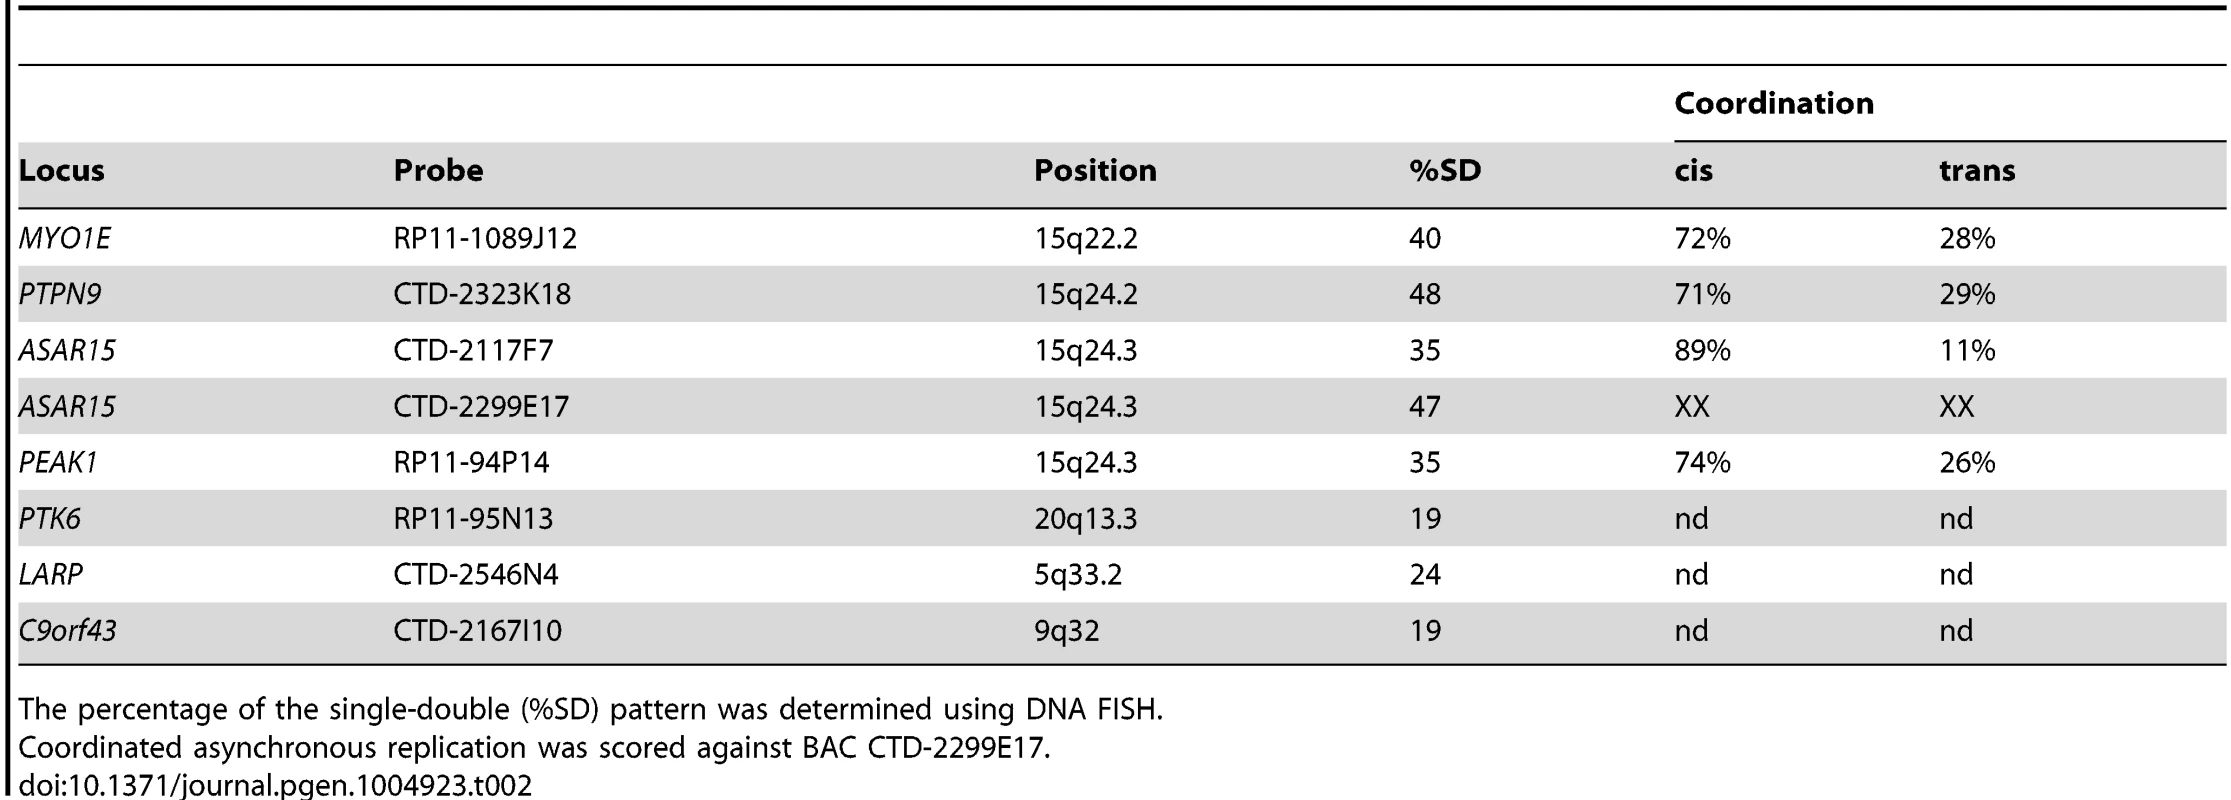 DNA FISH analysis of human loci.